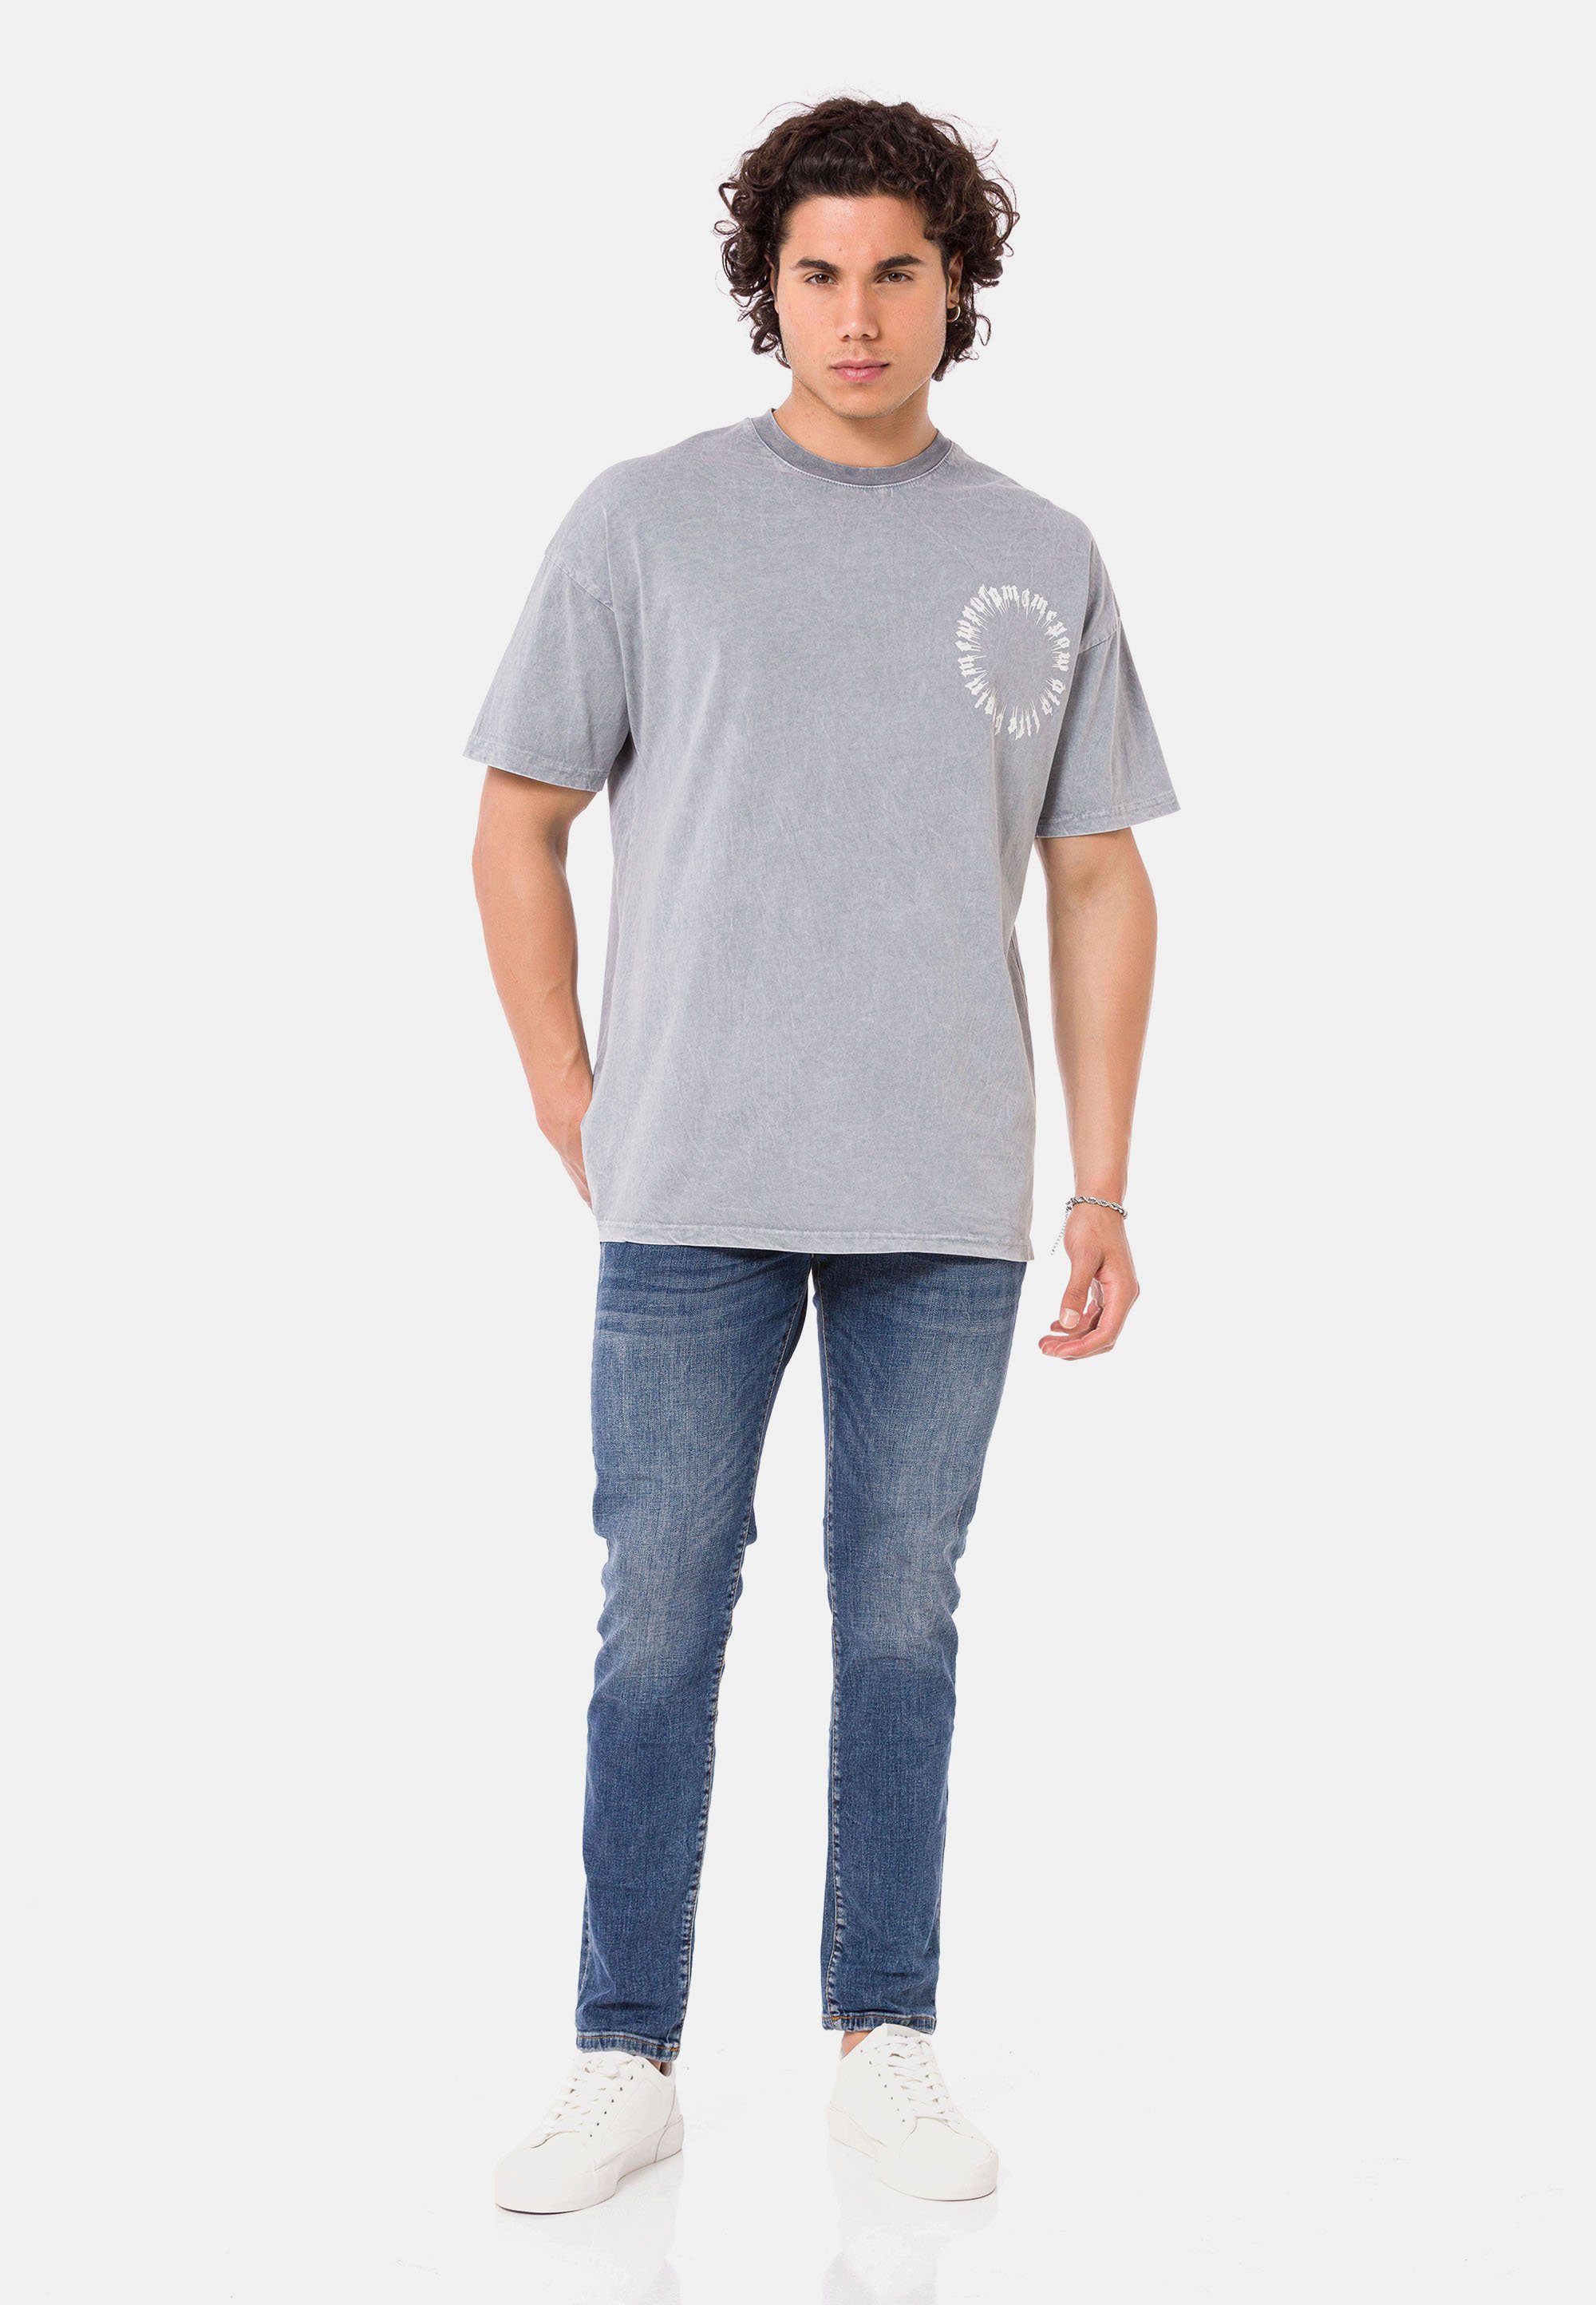 RedBridge T-Shirt Rücken Print großflächigem Runcorn grau auf dem mit